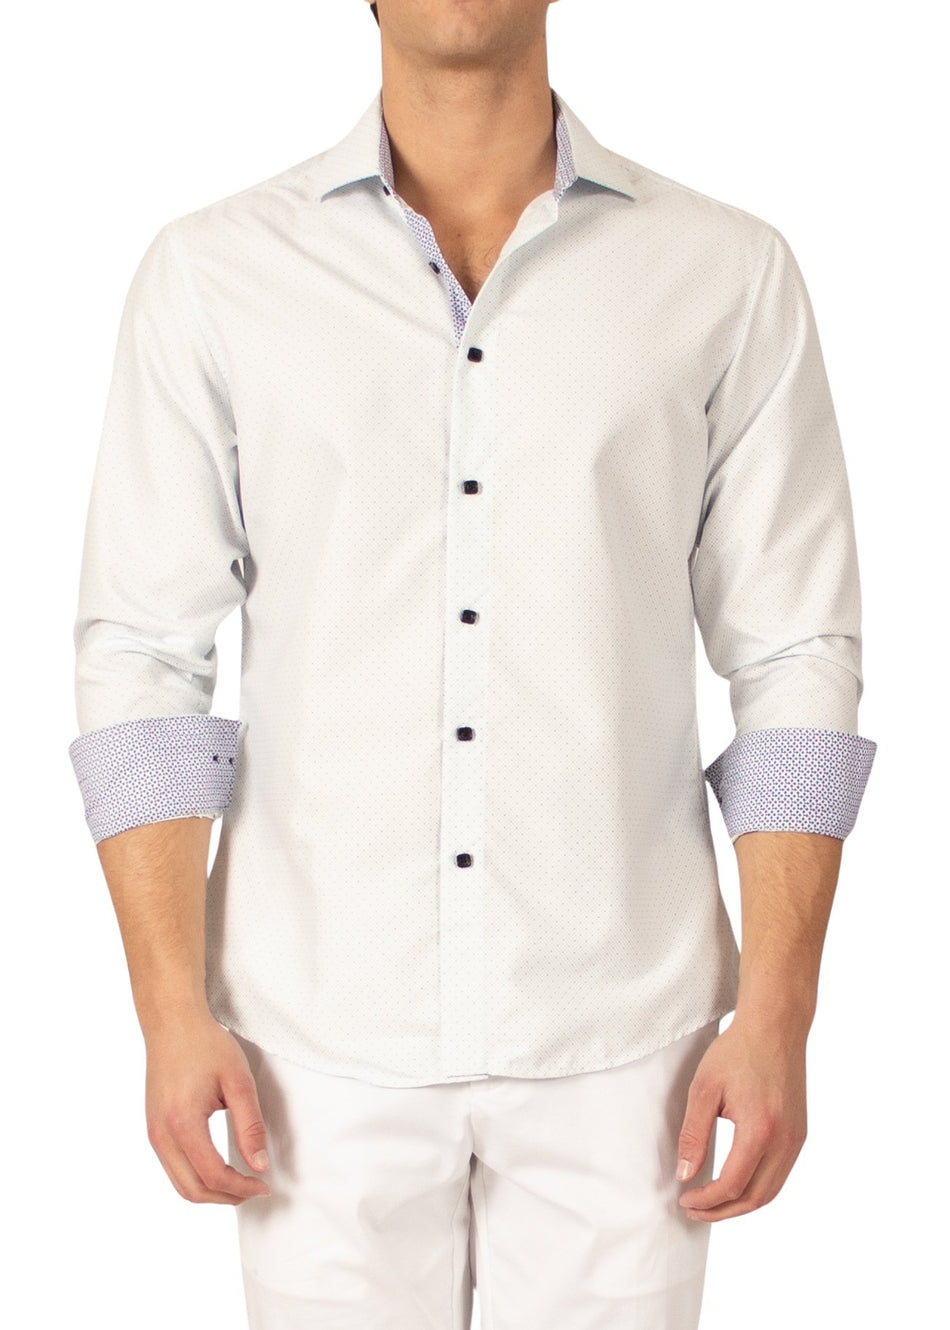 232317 - White Long Sleeve Shirt